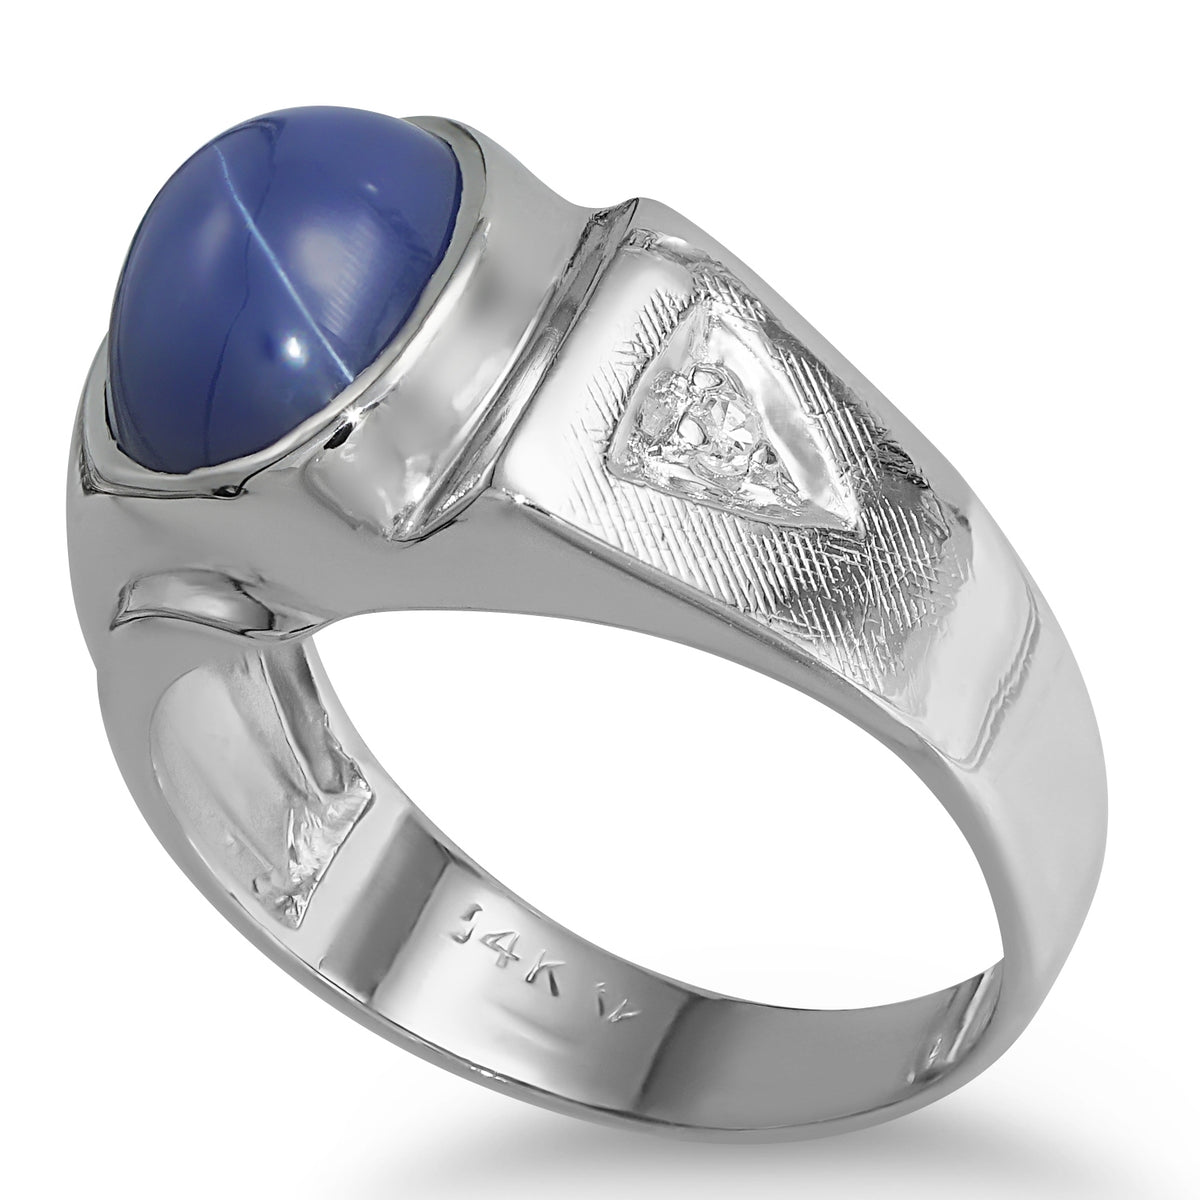 Star Sapphire Ring